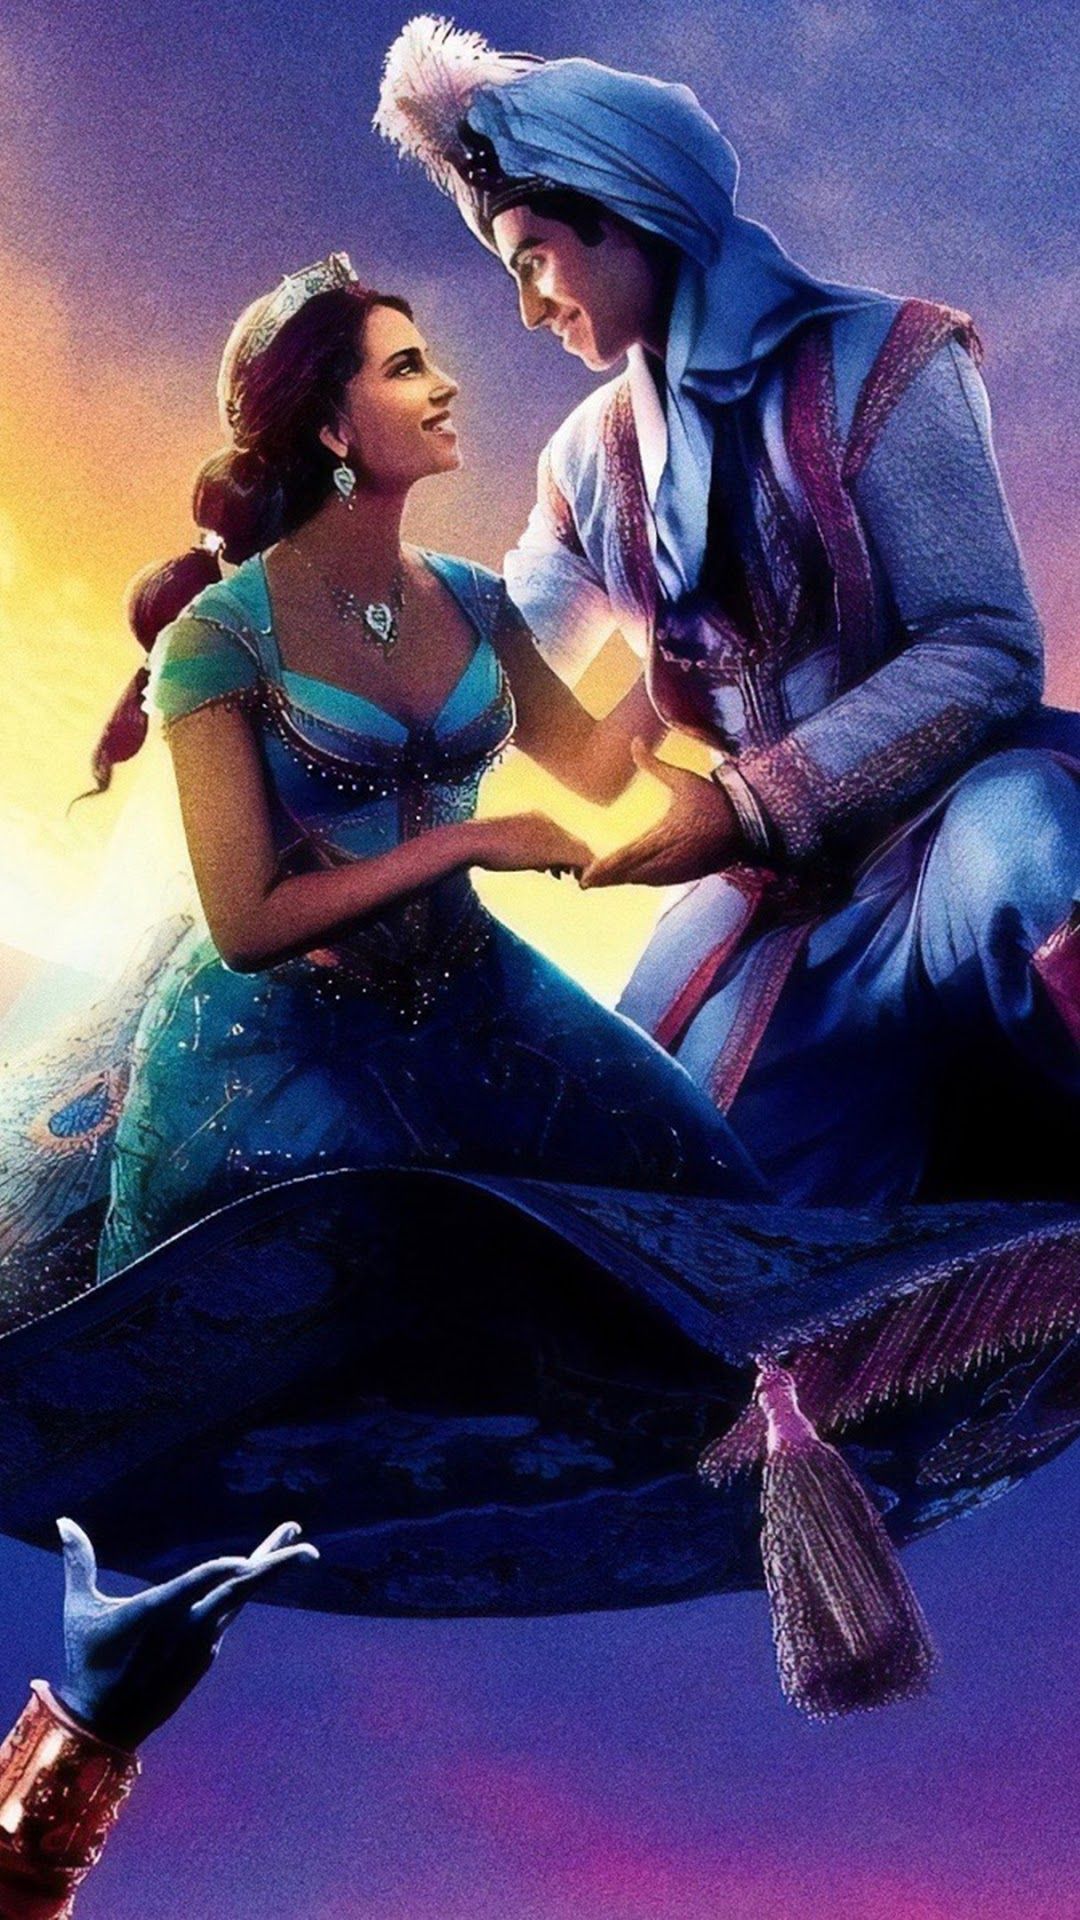 Aladdin, Genie, Jasmine, Aladdin phone HD Wallpaper, Image, Background, Photo and Picture. Mocah HD Wallpaper